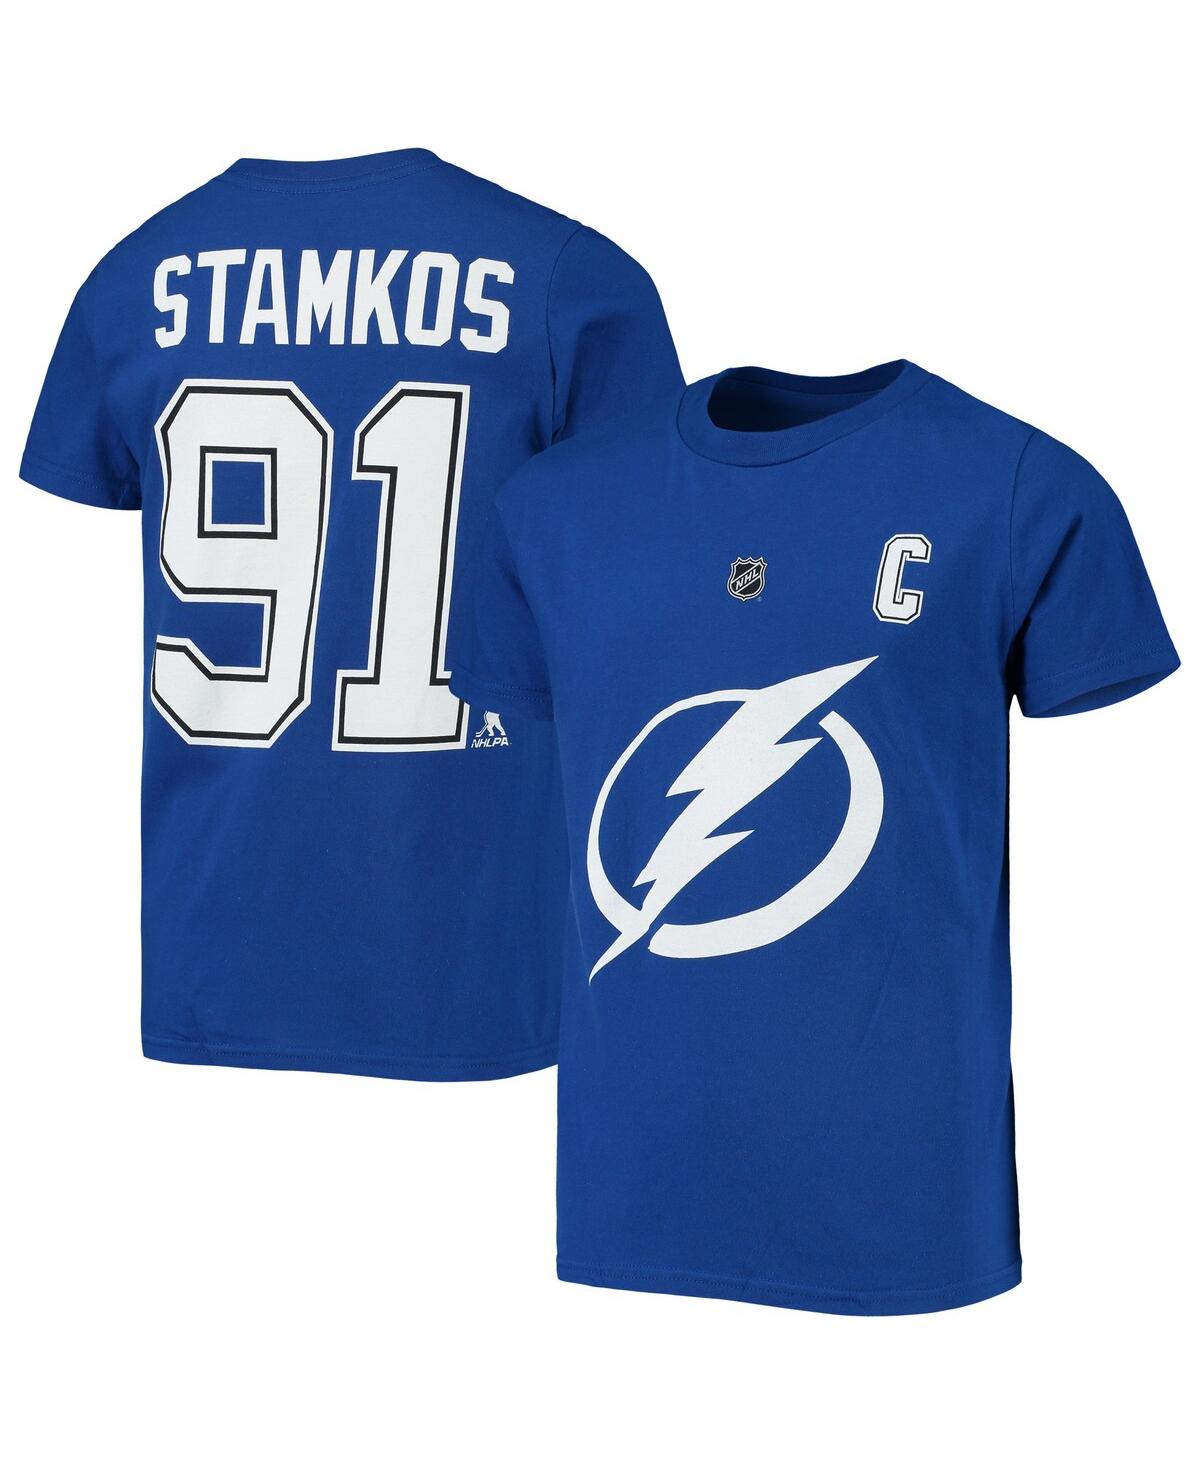 Outerstuff Kids' Big Boys Steven Stamkos Blue Tampa Bay Lightning Player Name And Number T-shirt